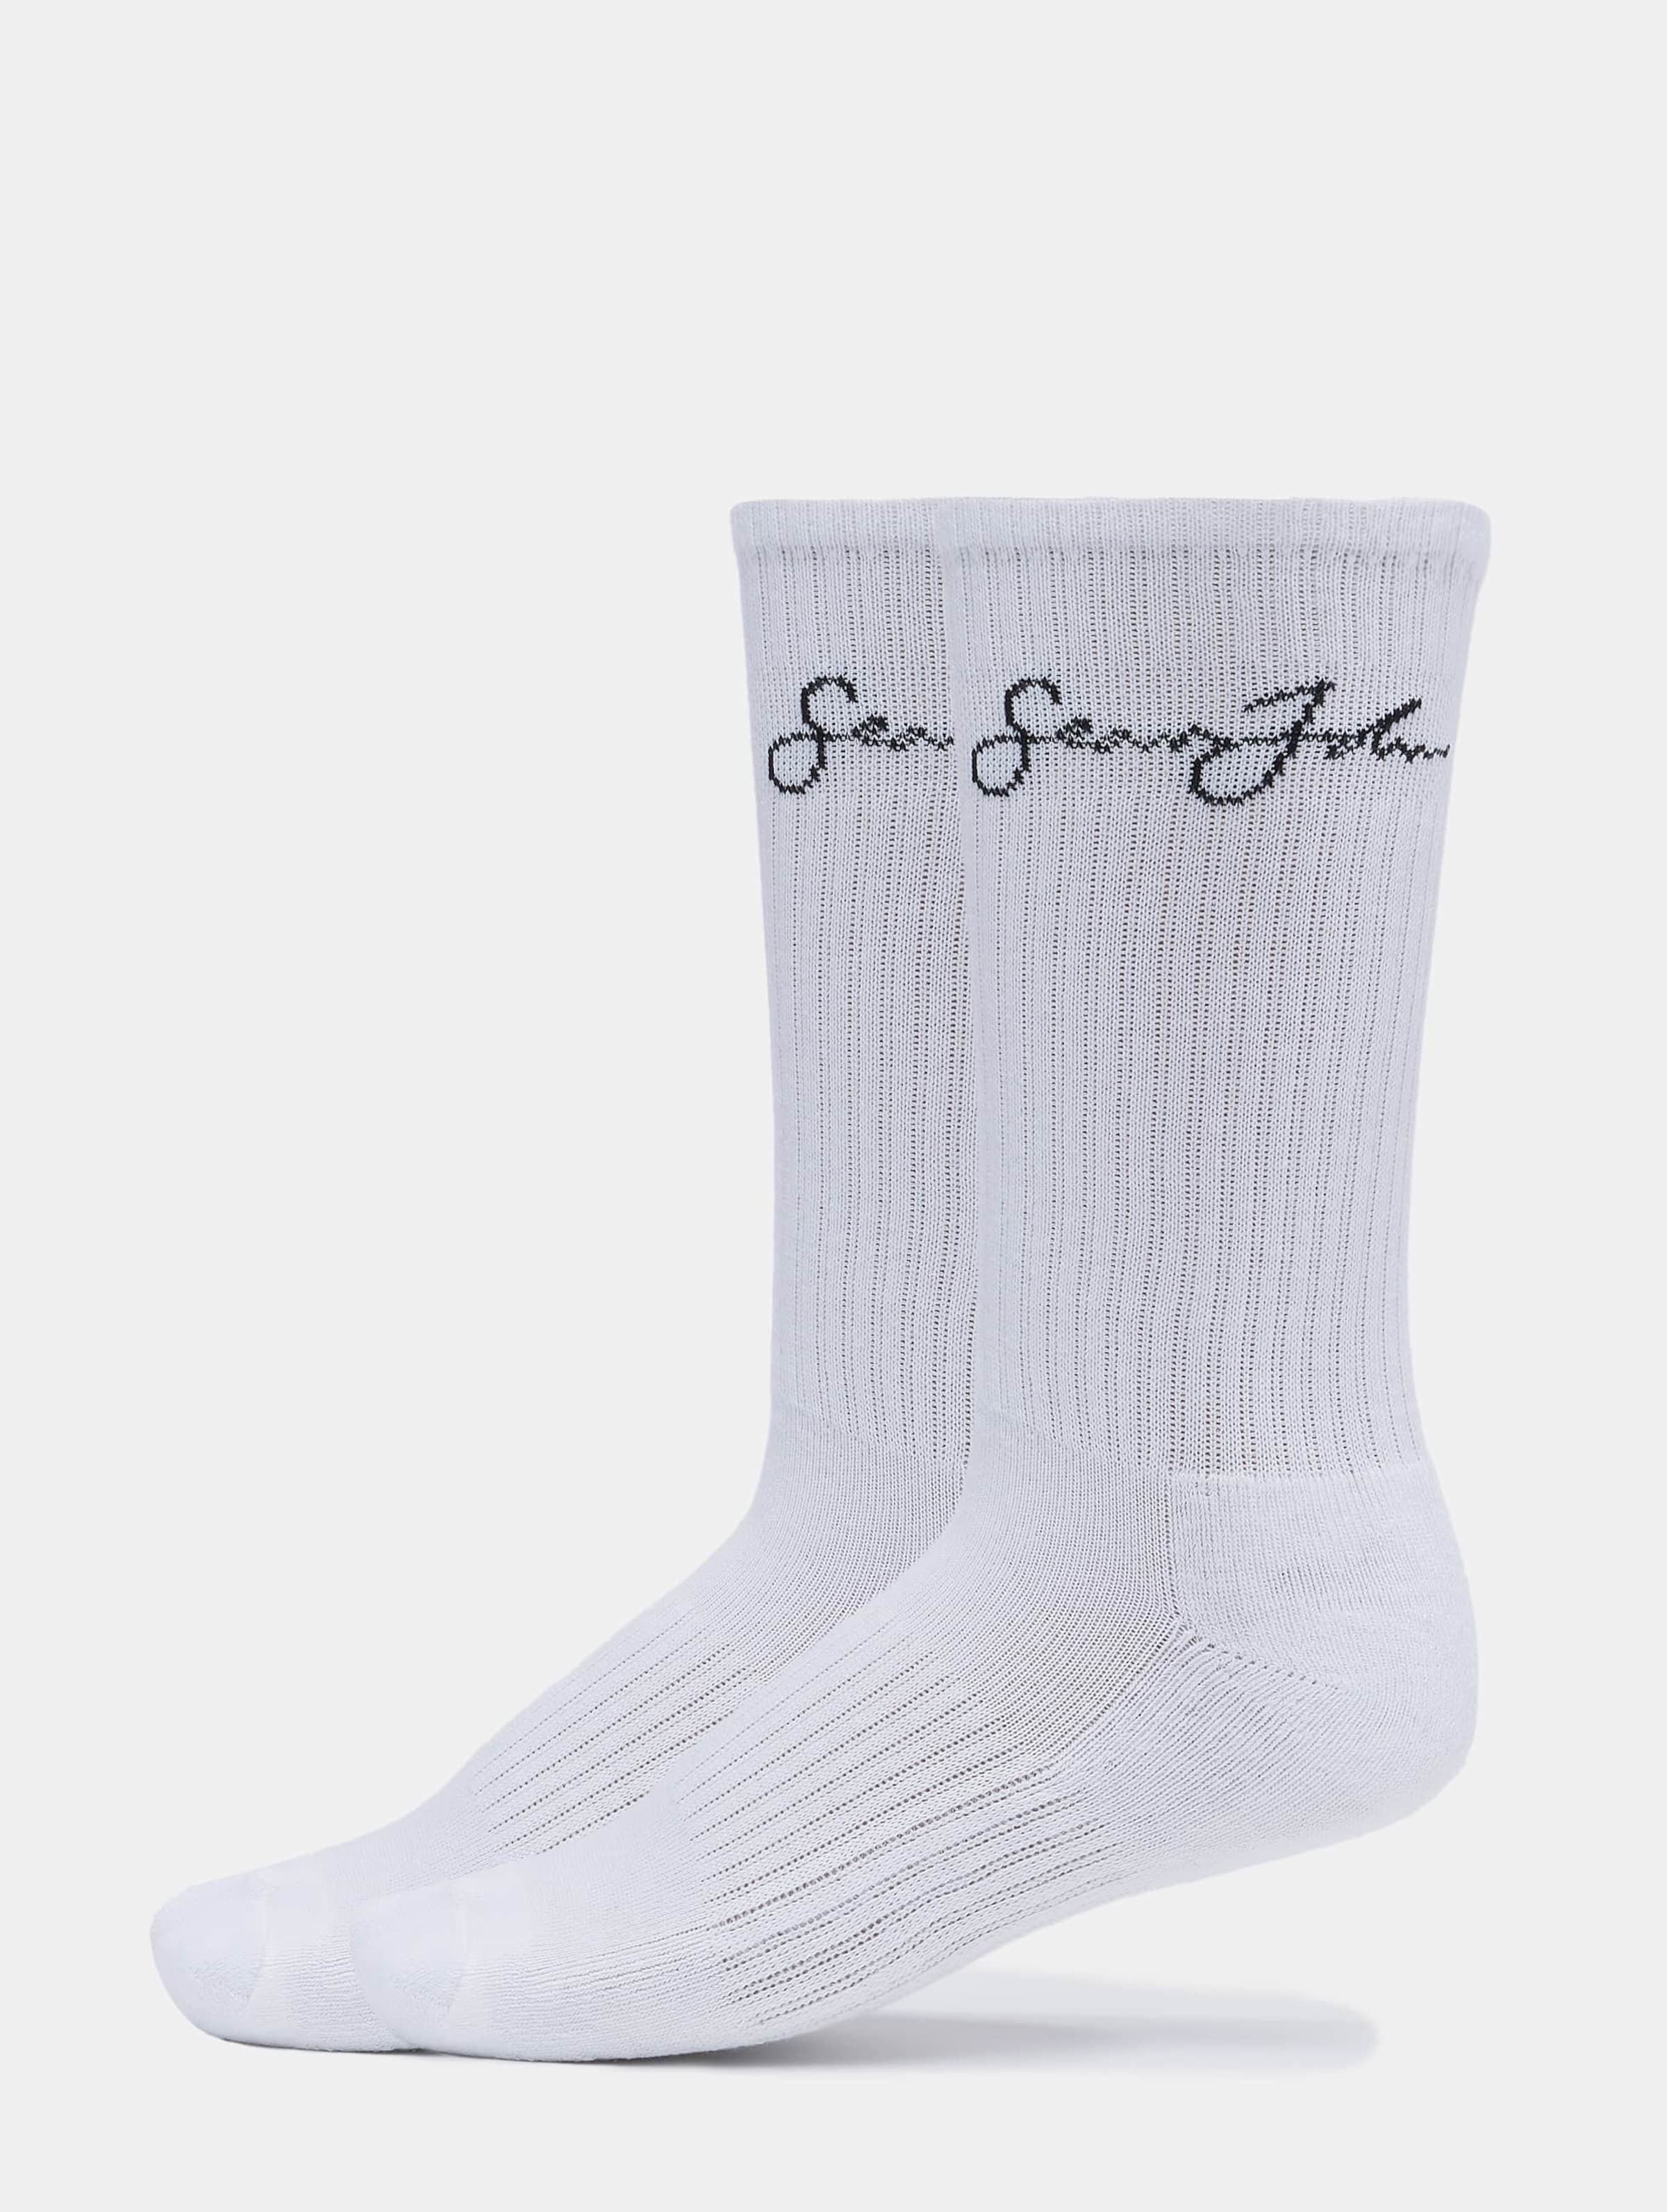 Sean John Script Logo 2xPack Socken Frauen,Männer,Unisex op kleur wit, Maat 43-46